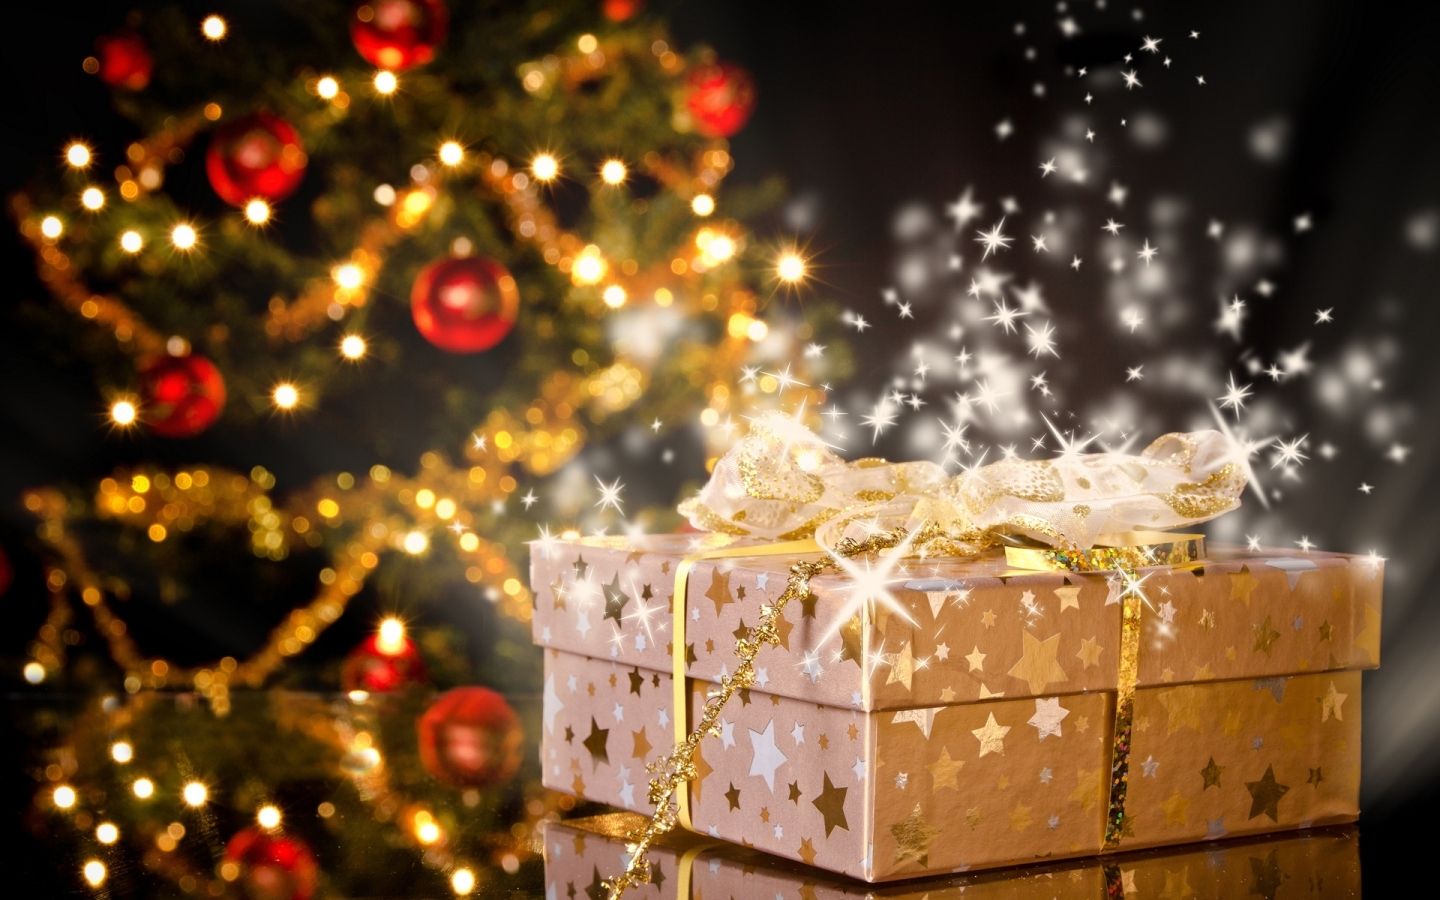 Christmas Tree Magic Day and Magic Gifts MacBook Air Wallpaper Download